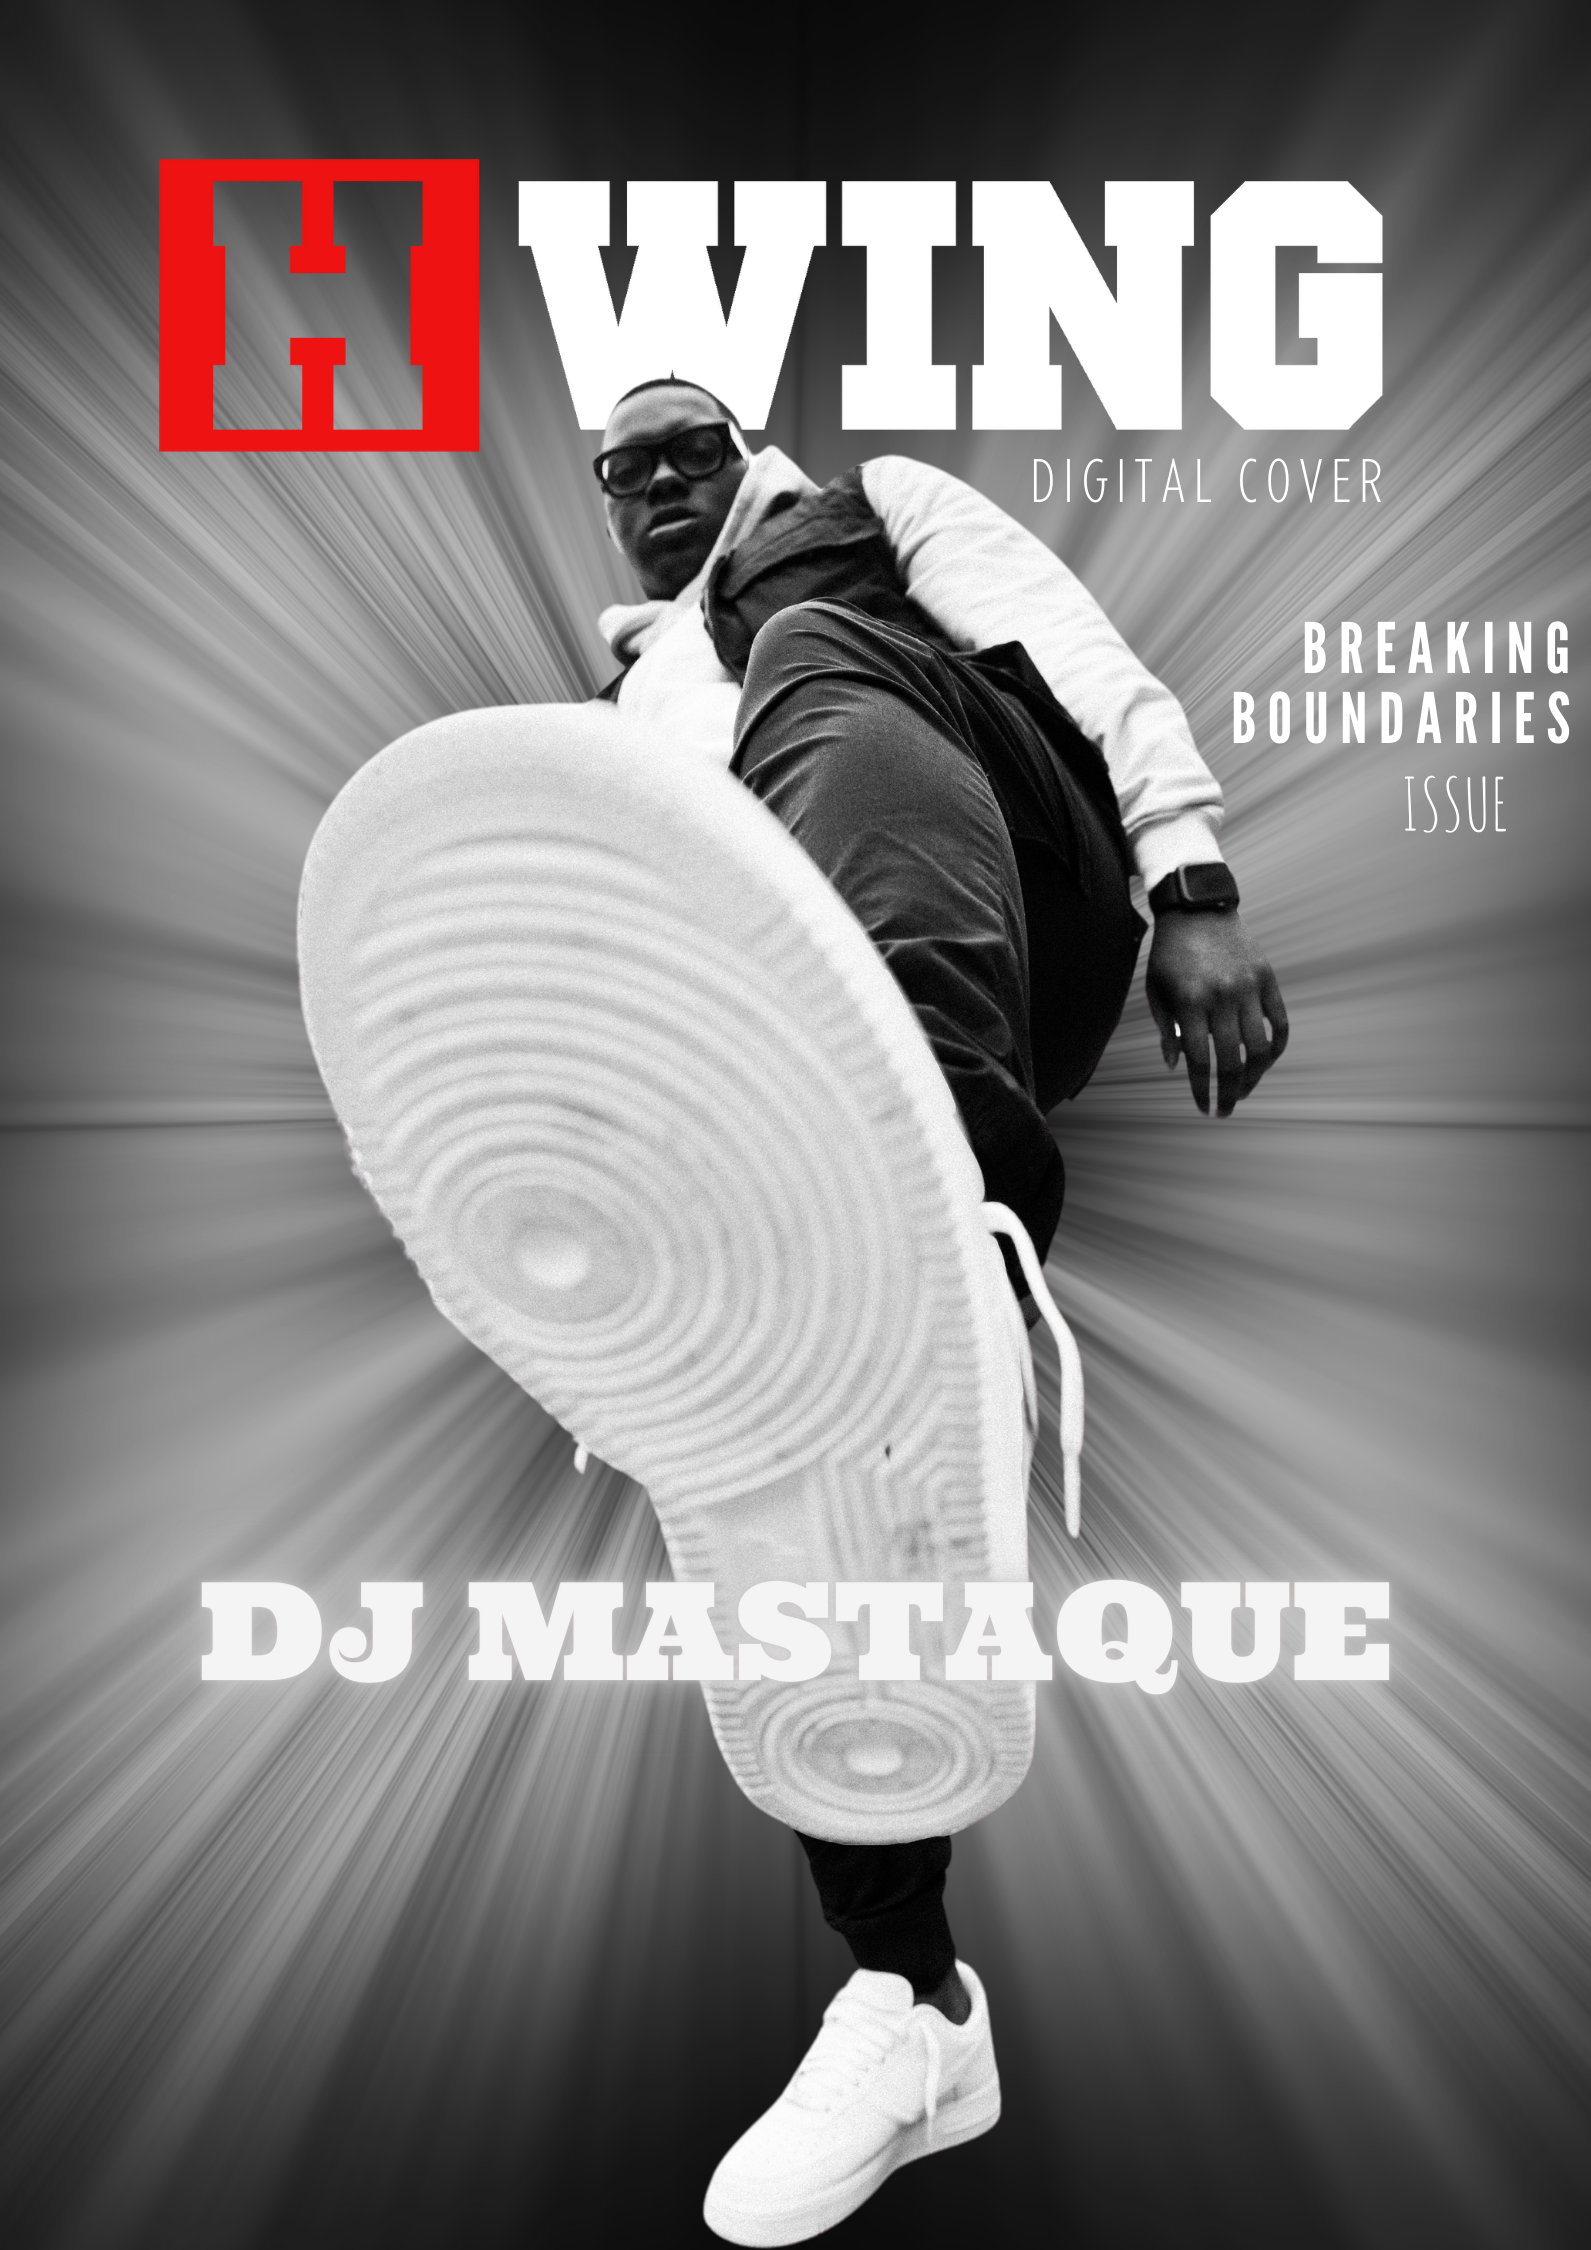 DJ Mastaque HWING